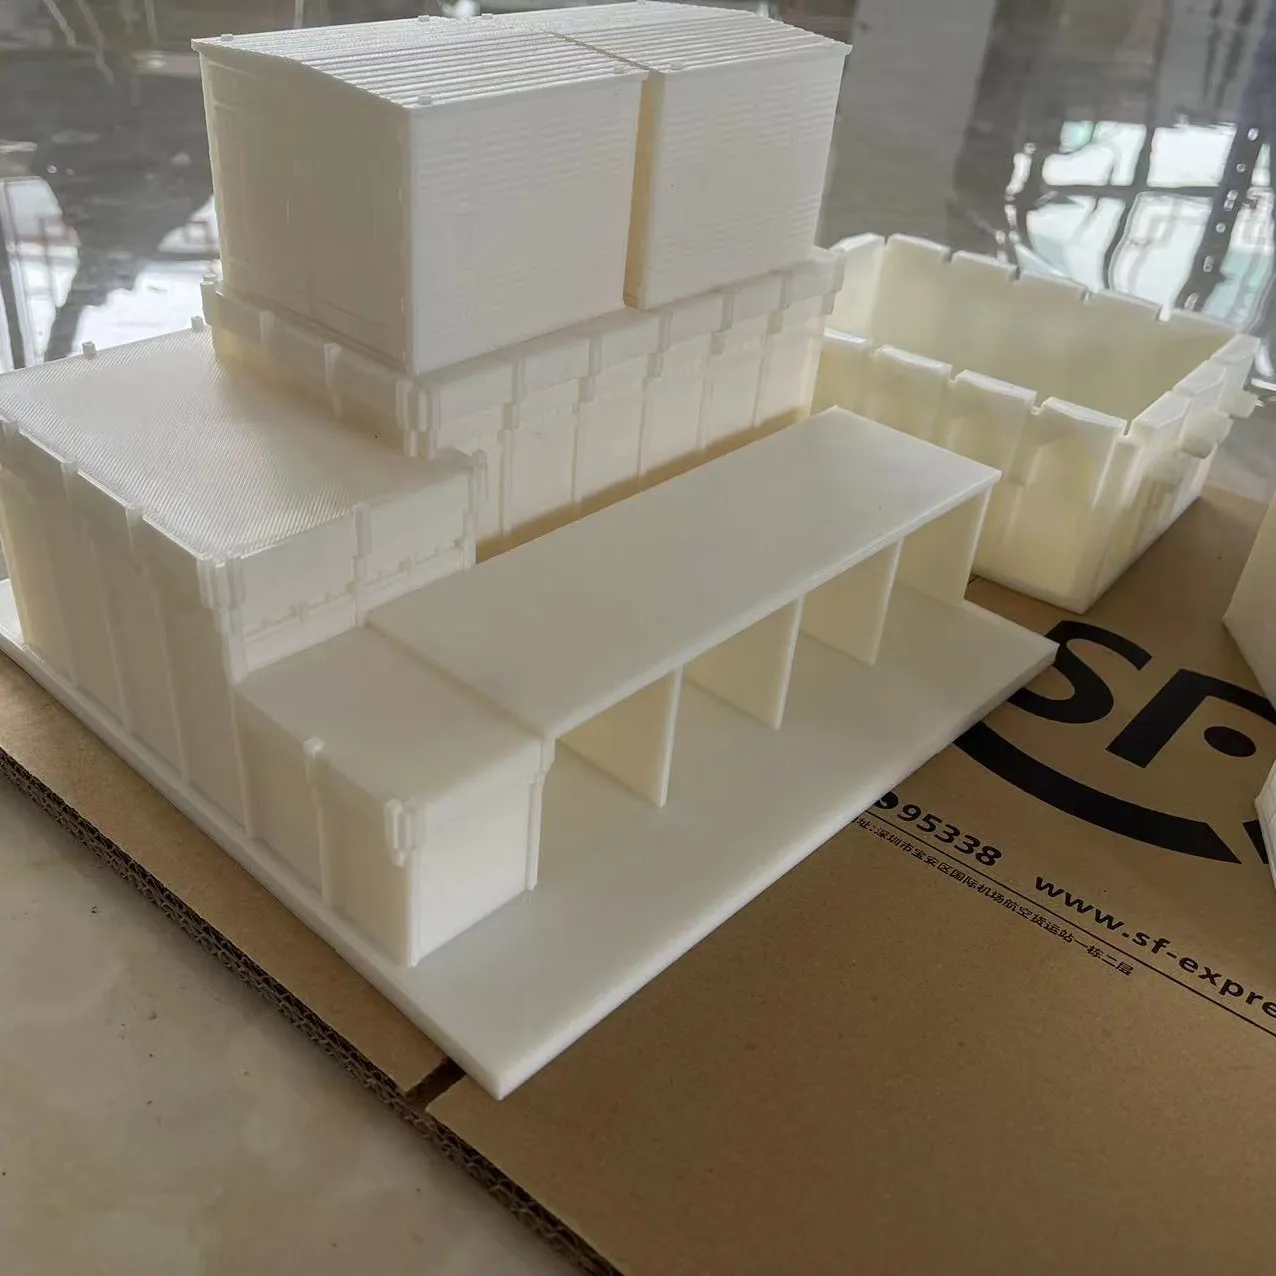 2022 sla sls fdm abs nylon 3d printing service rapid prototyping for industrial design manufacturer